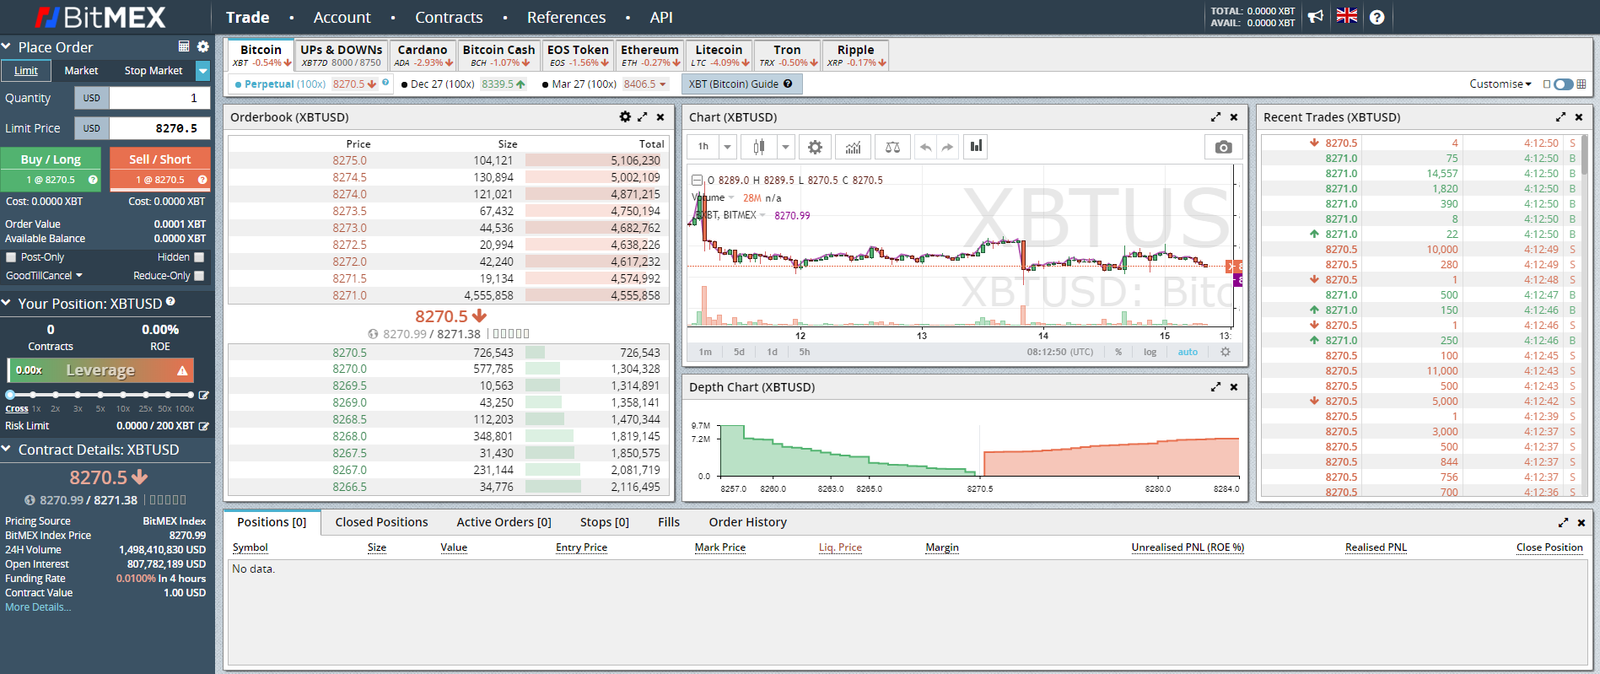 bitmex trading